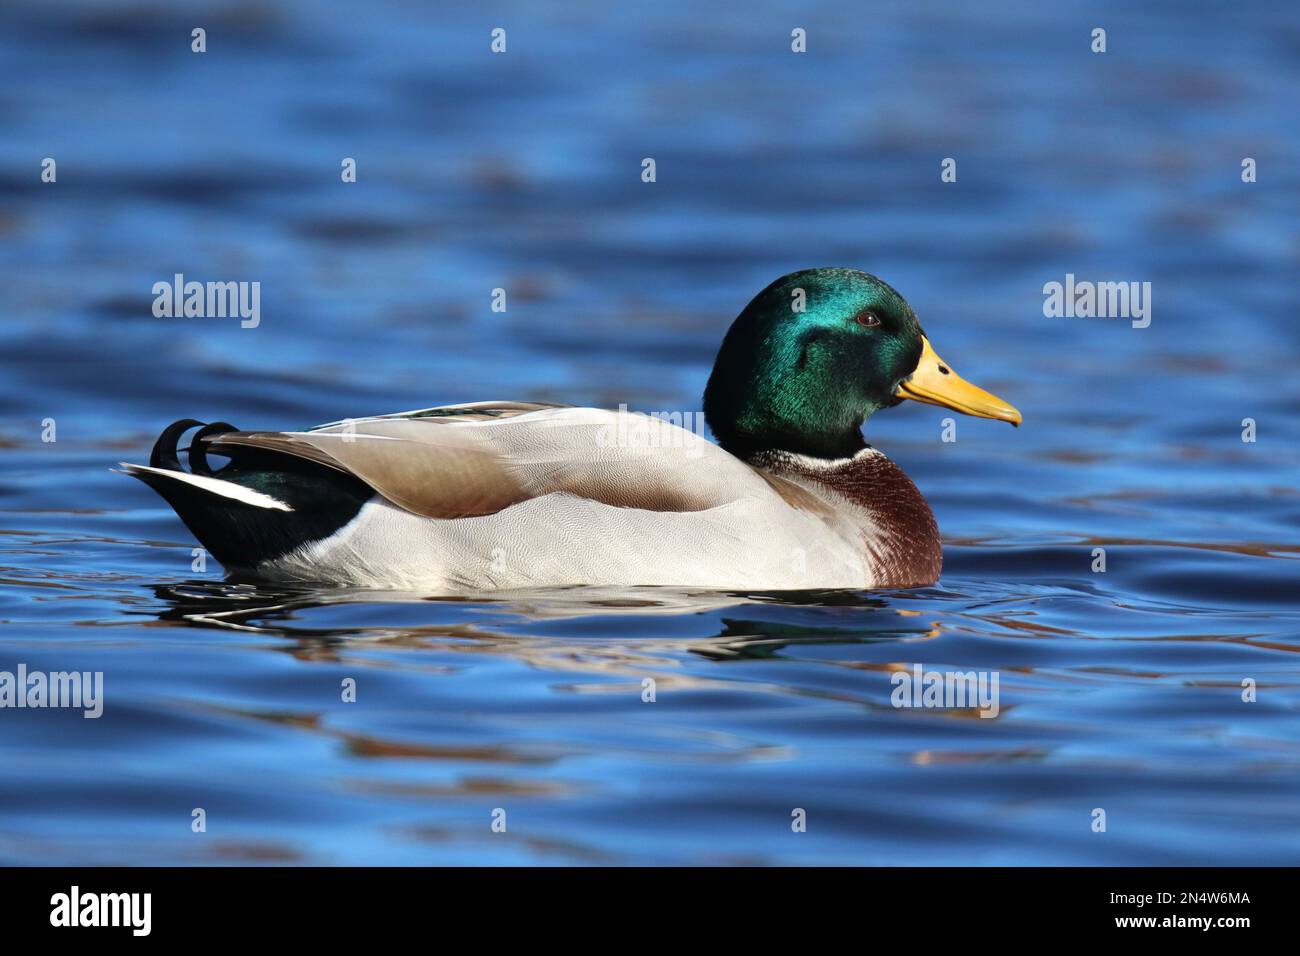 Drake mallard duck Anas platyrhynchos swimming on a blue lake in winter in side view Stock Photo